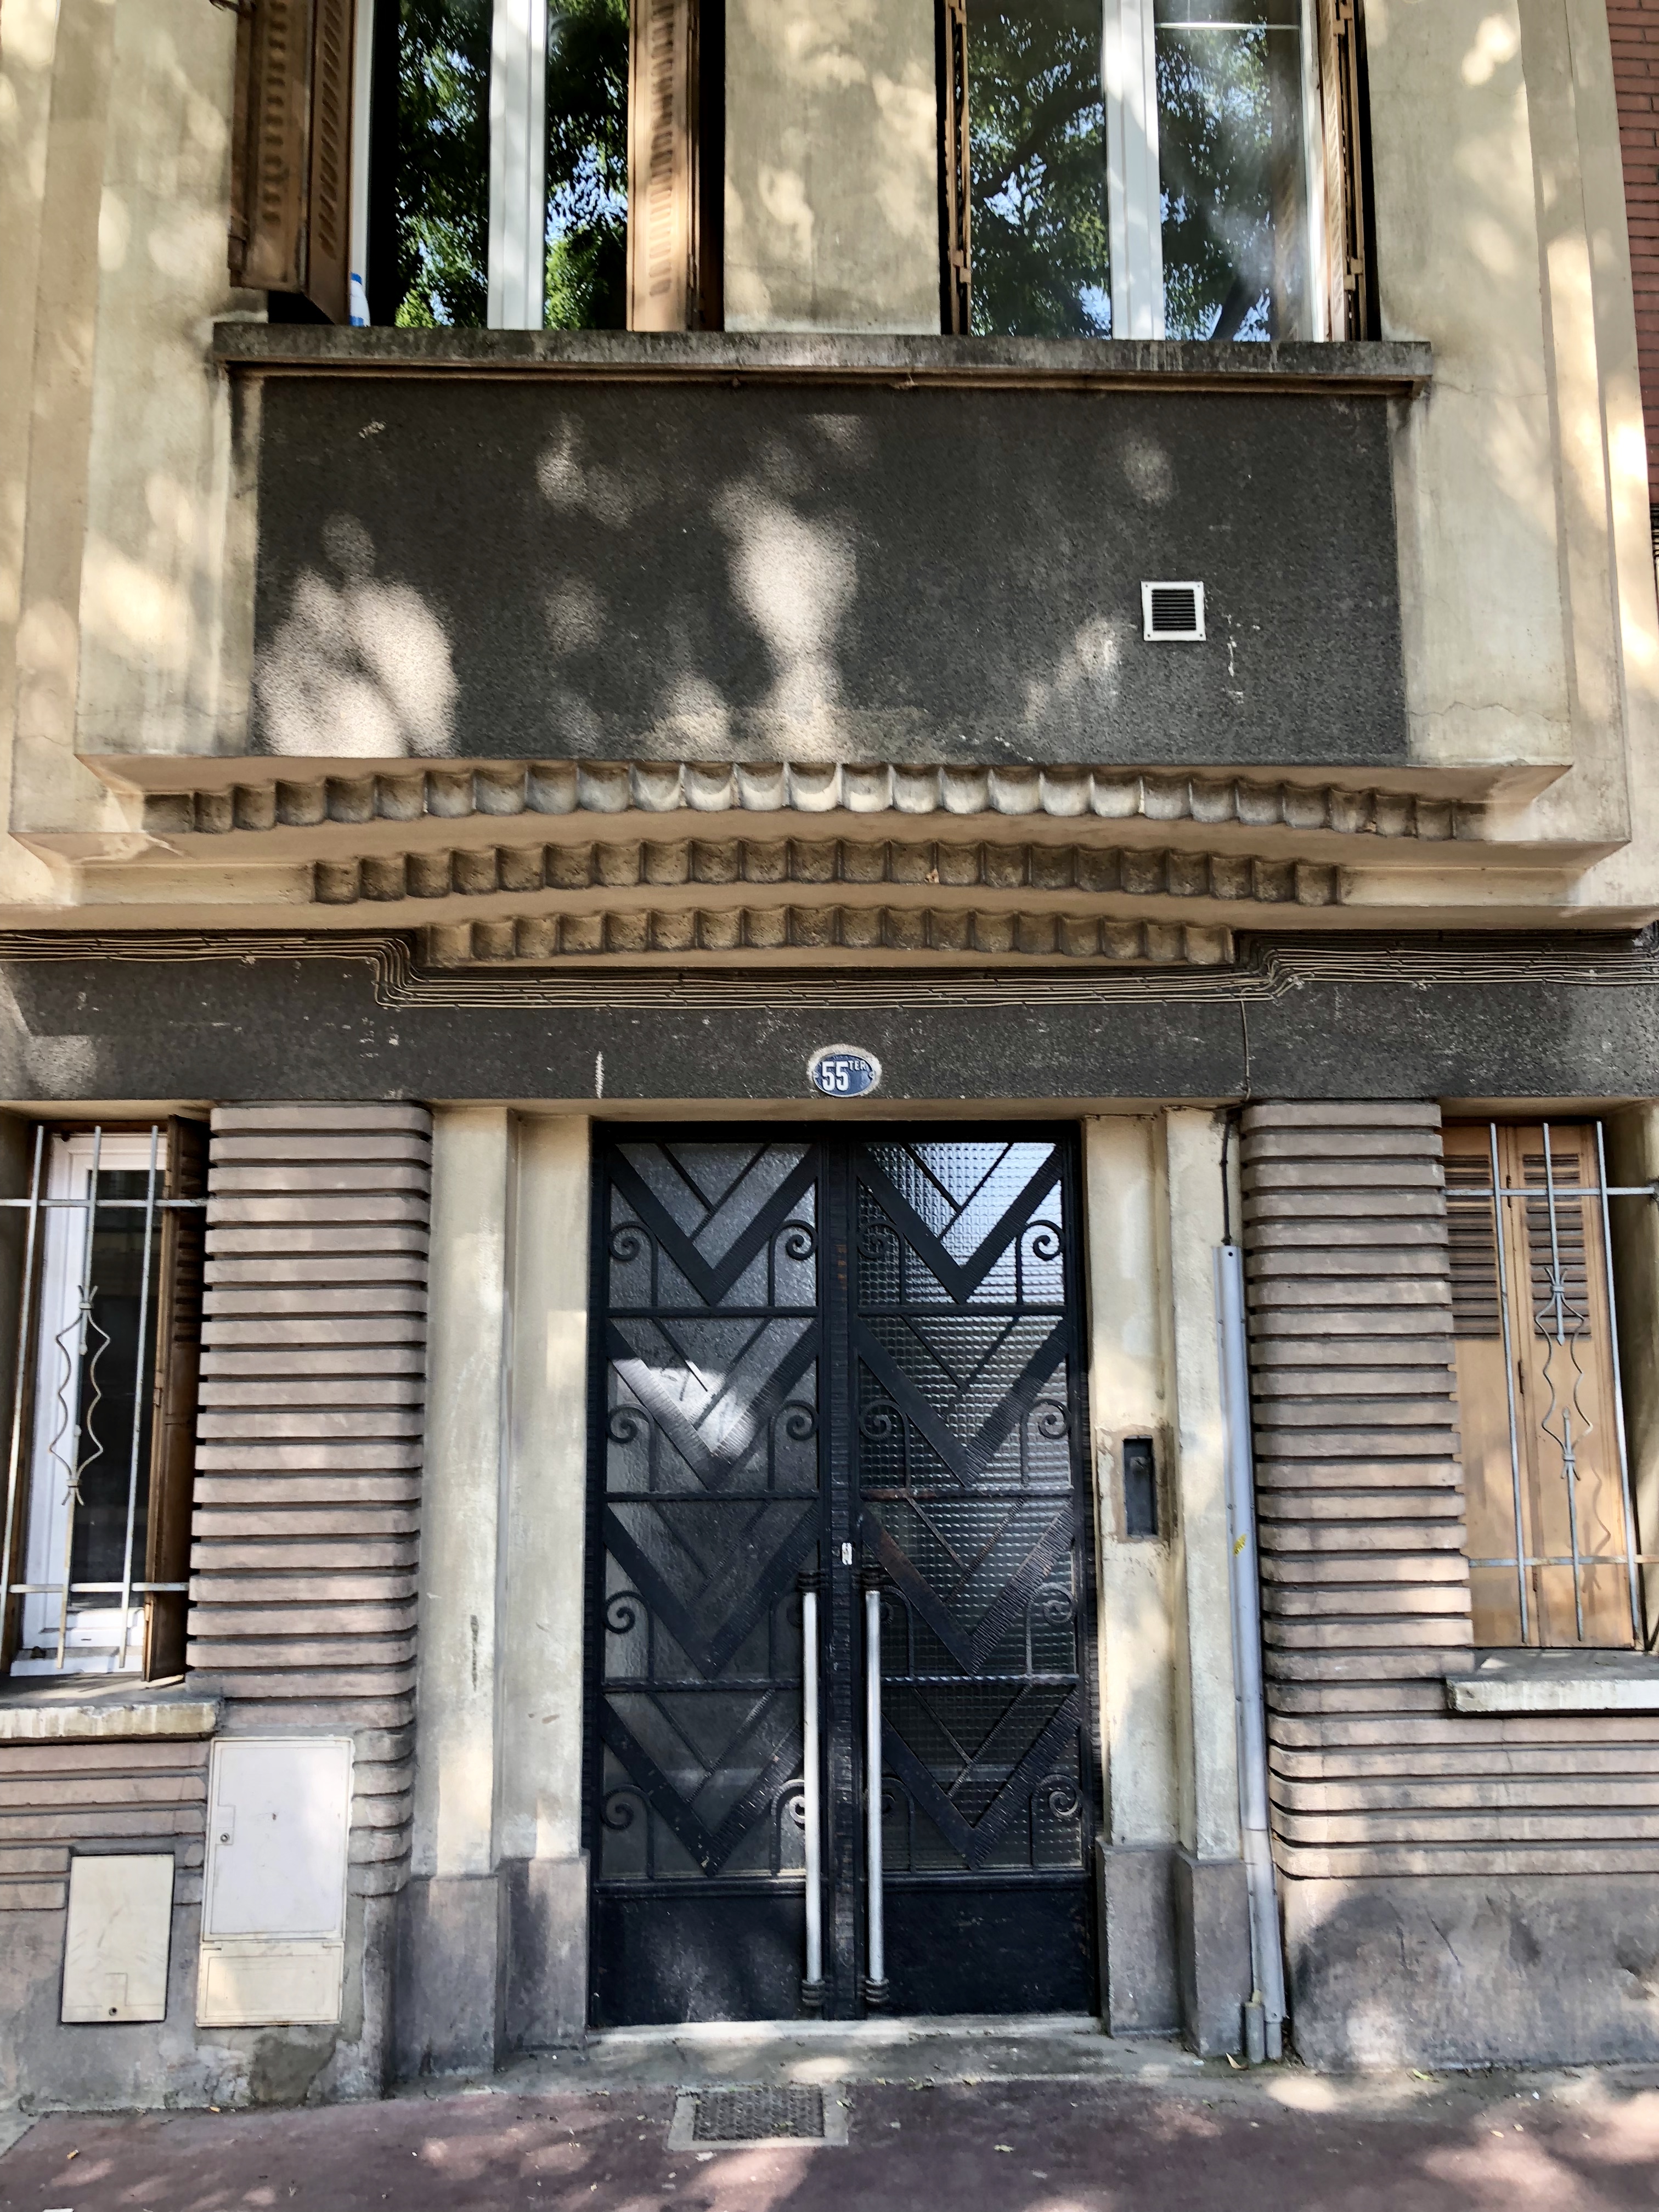 Immeuble Bankaert, avenue H. Serres, arch. M. Munvez, 1936